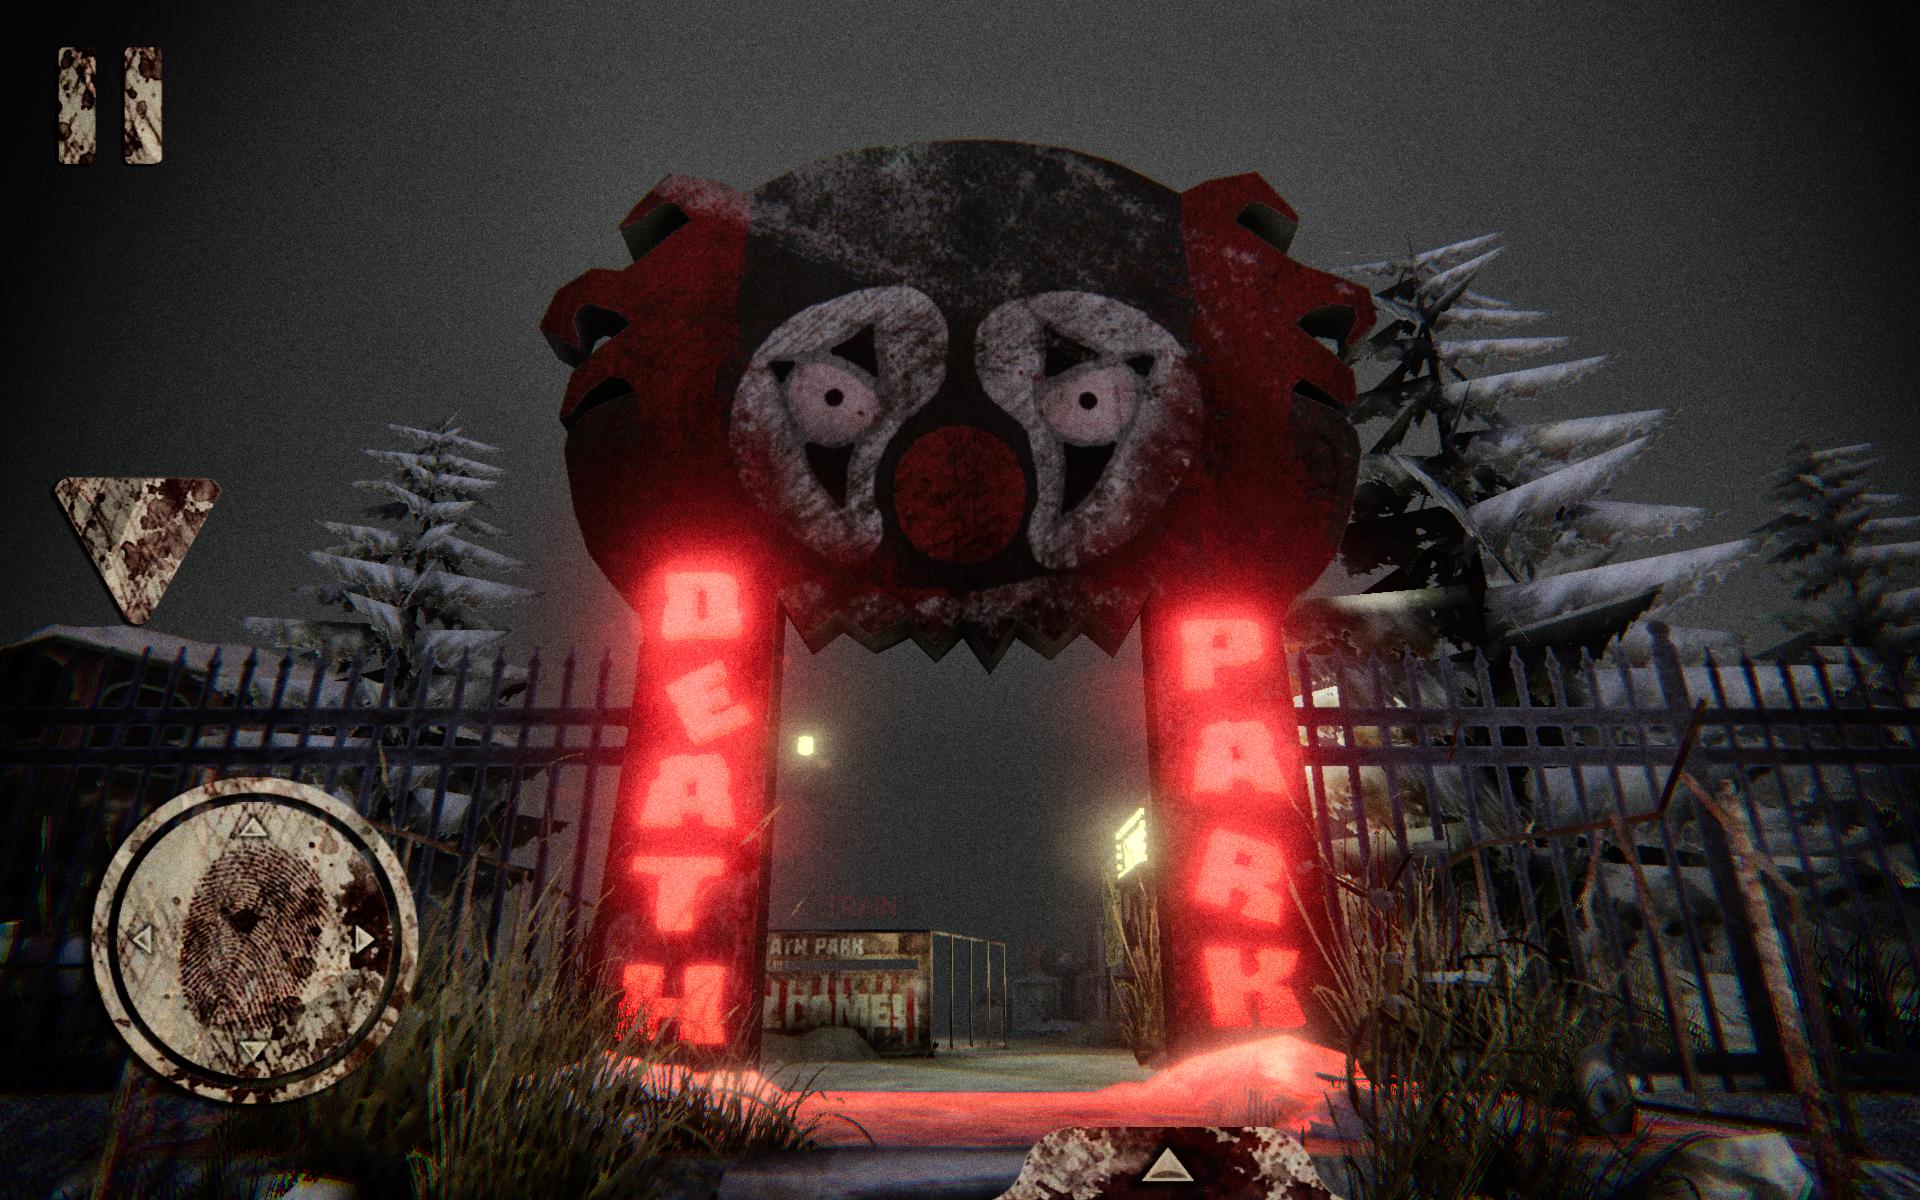 Death Park Scary Clown Survival Horror Game 1.6.0 Screenshot 10